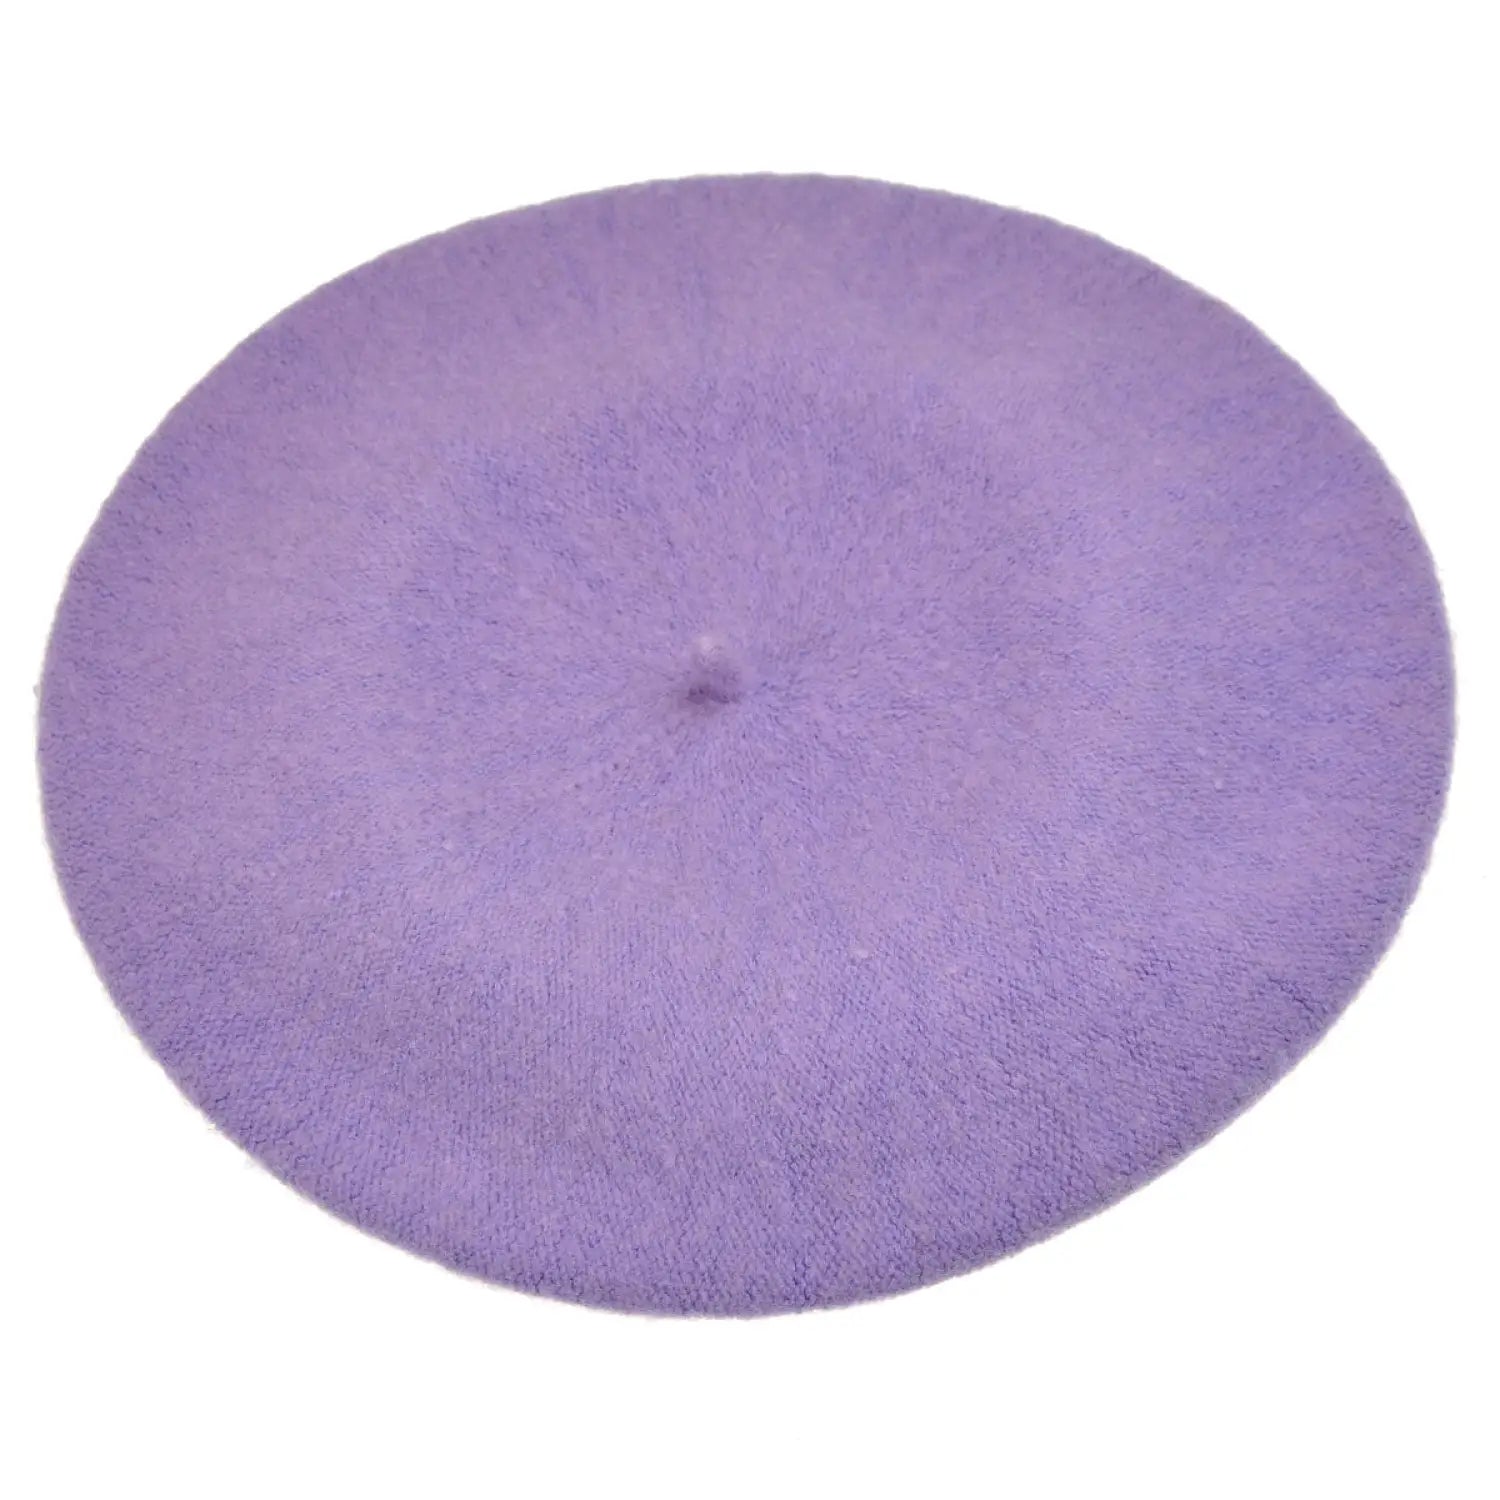 French wool beret next to purple round rug